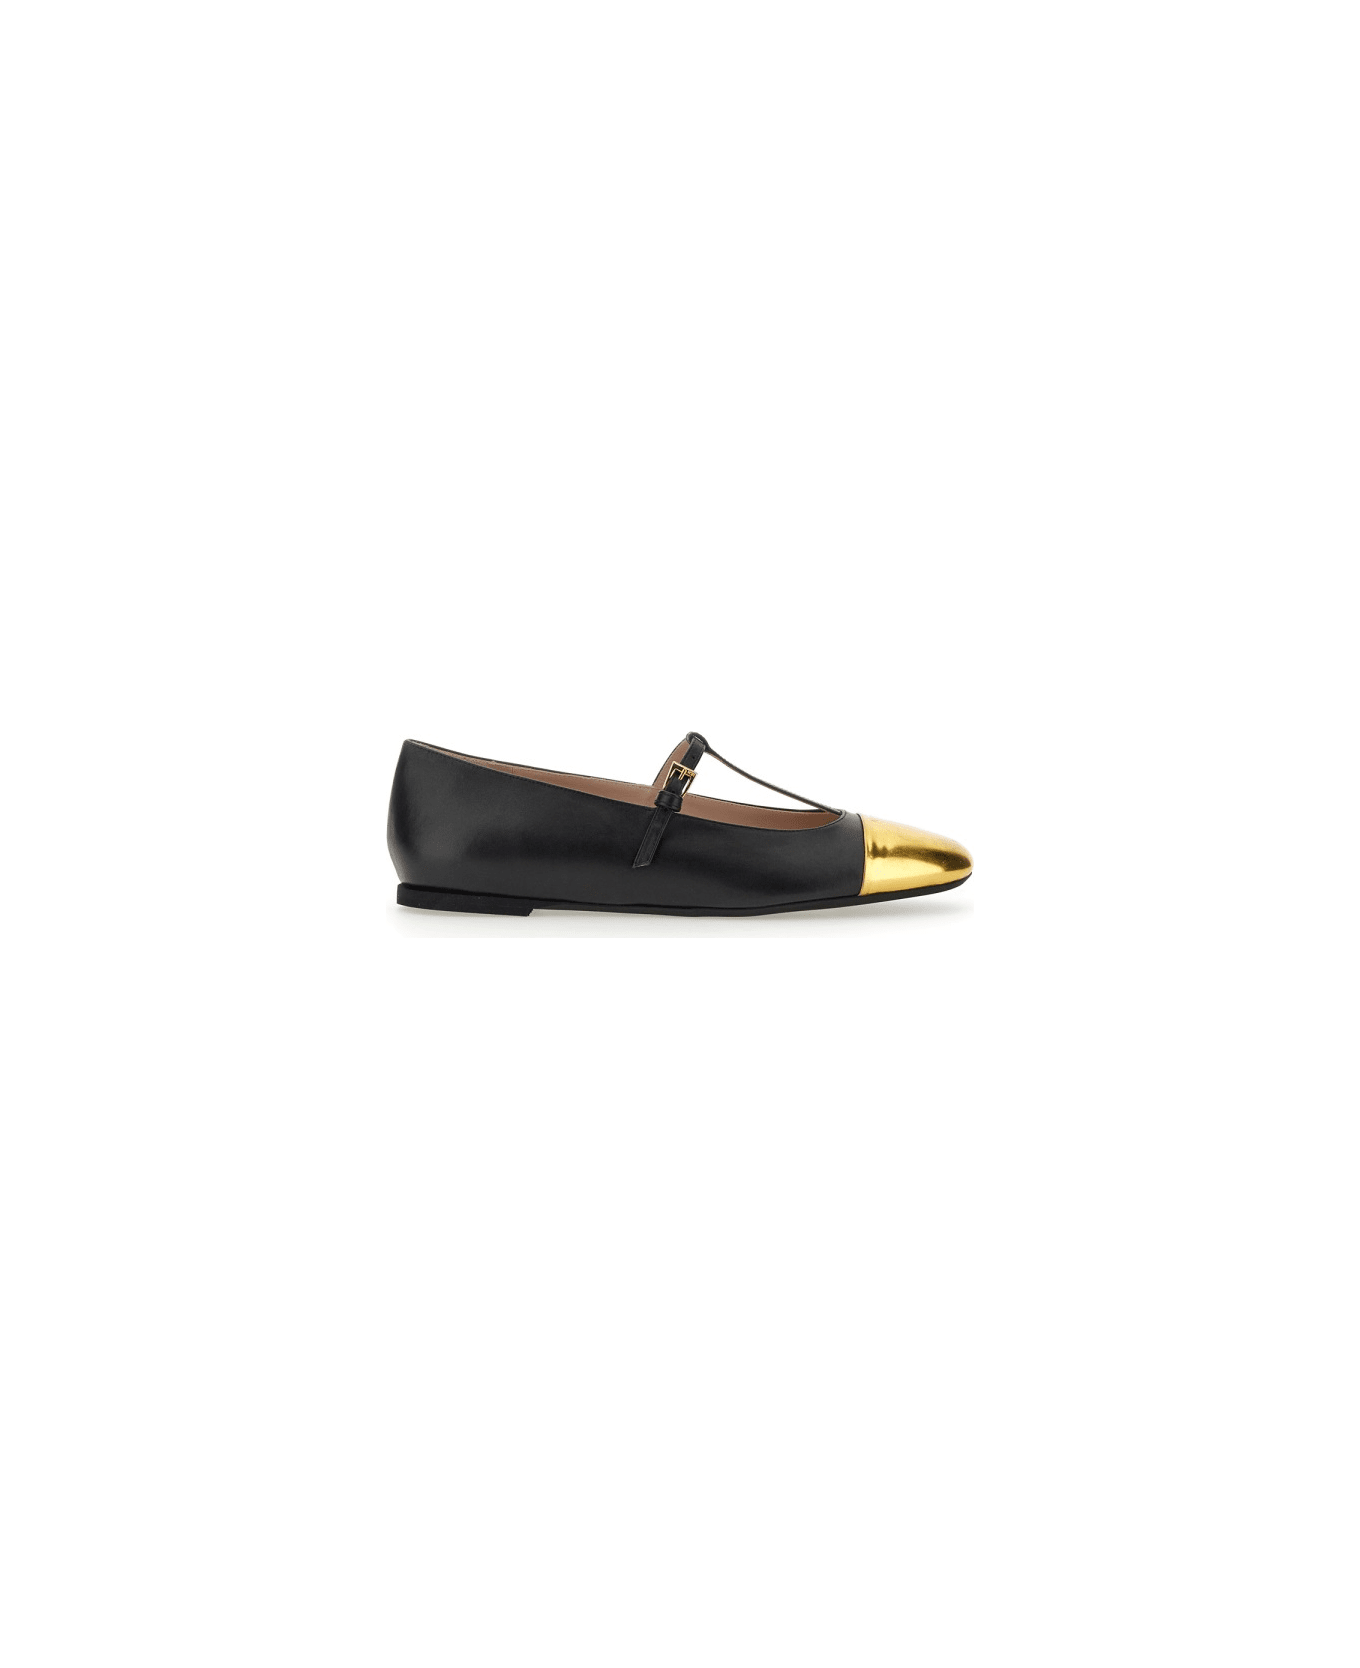 N.21 Leather Mary Jane - BLACK